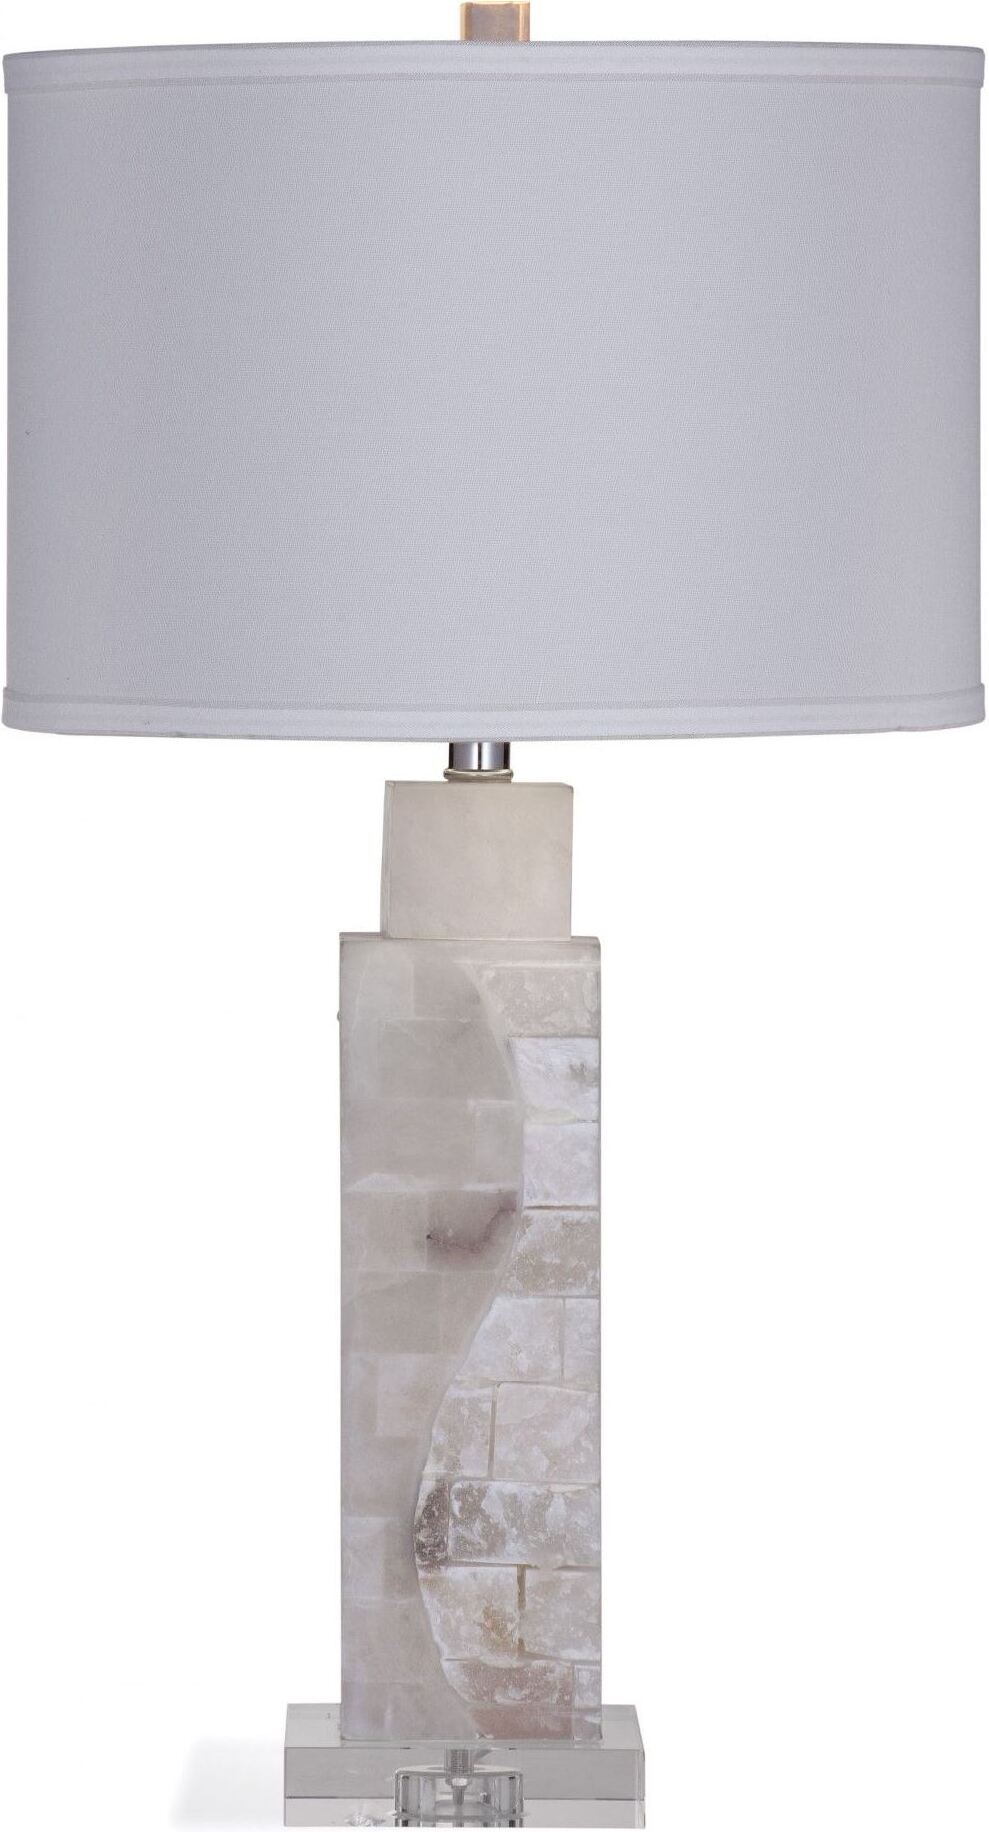 Presidio Table Lamp From Bassett Mirror, Bassett Mirror Company Table Lamps